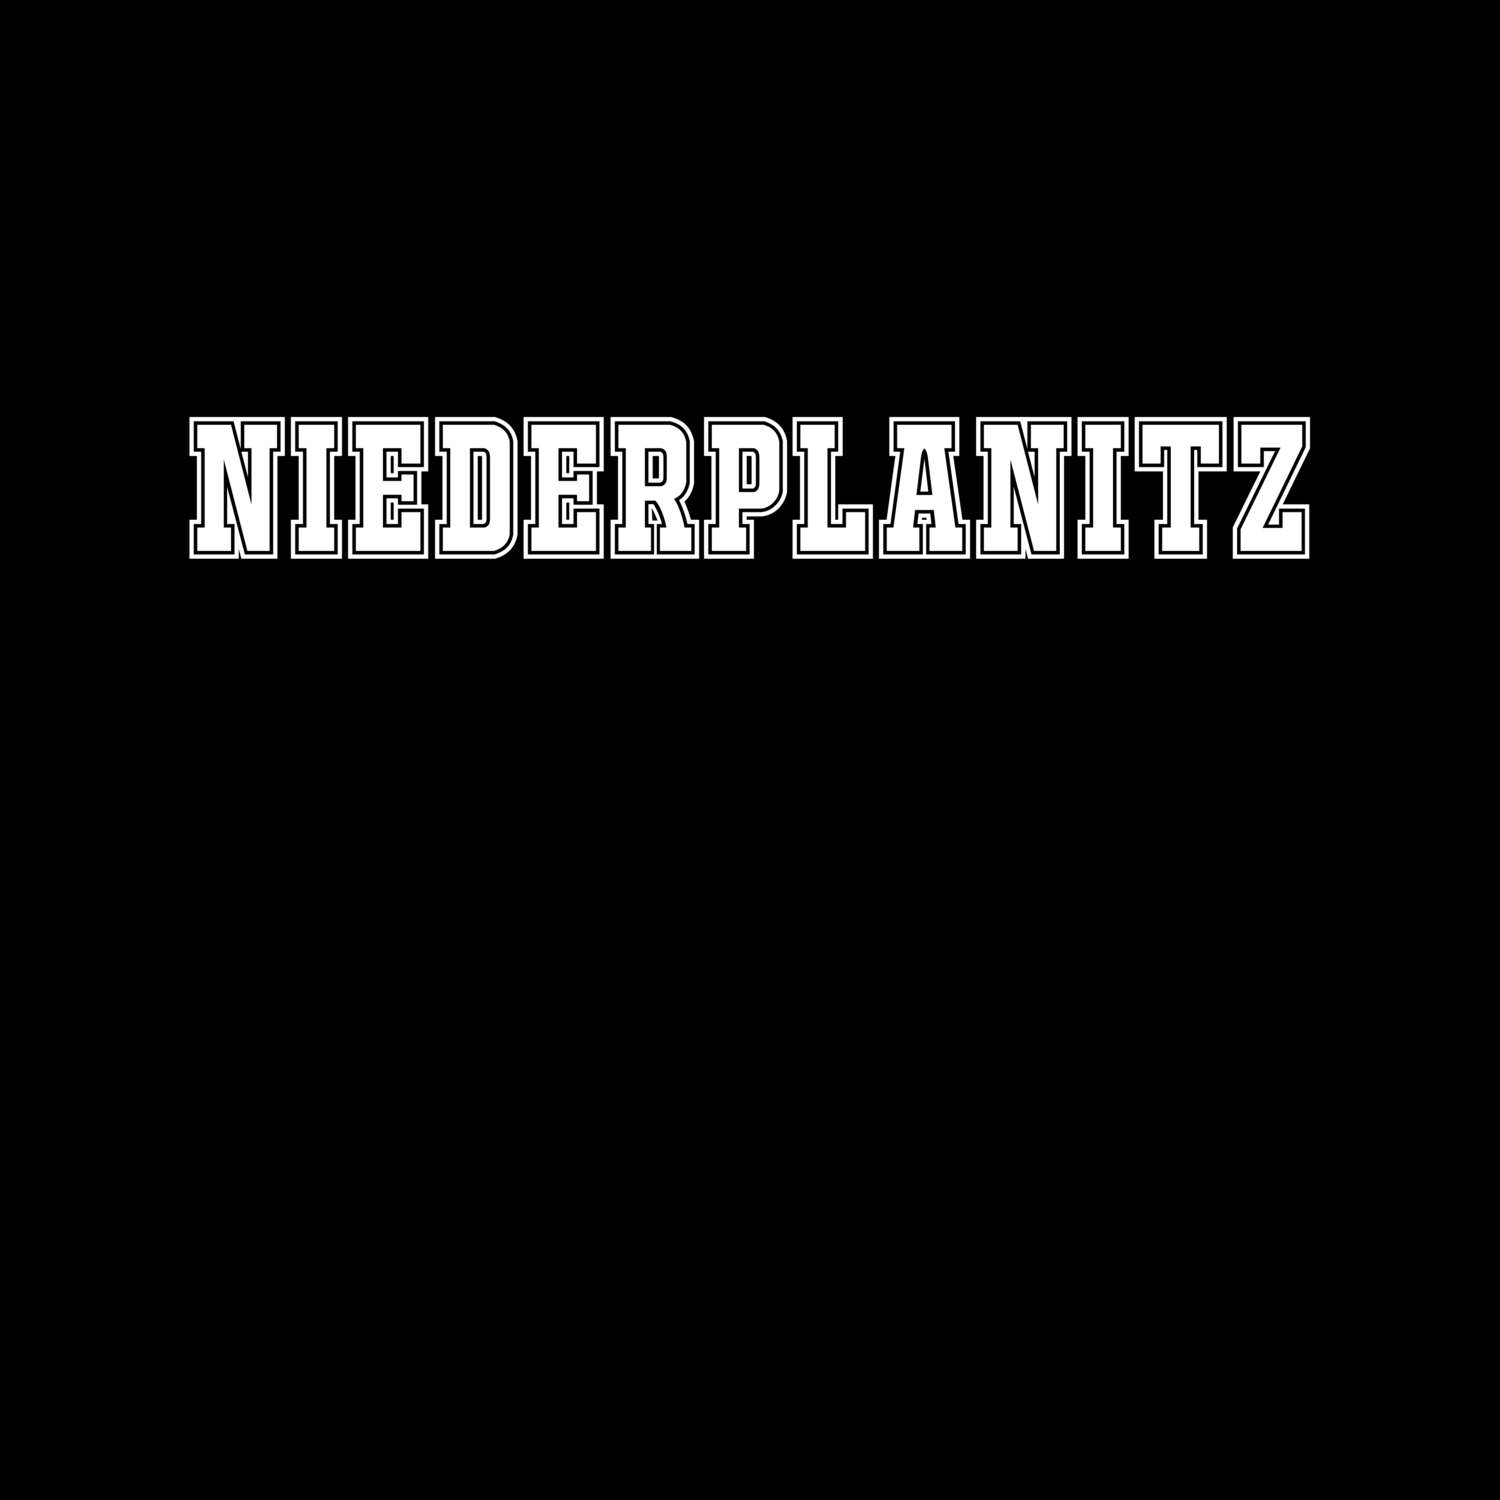 Niederplanitz T-Shirt »Classic«